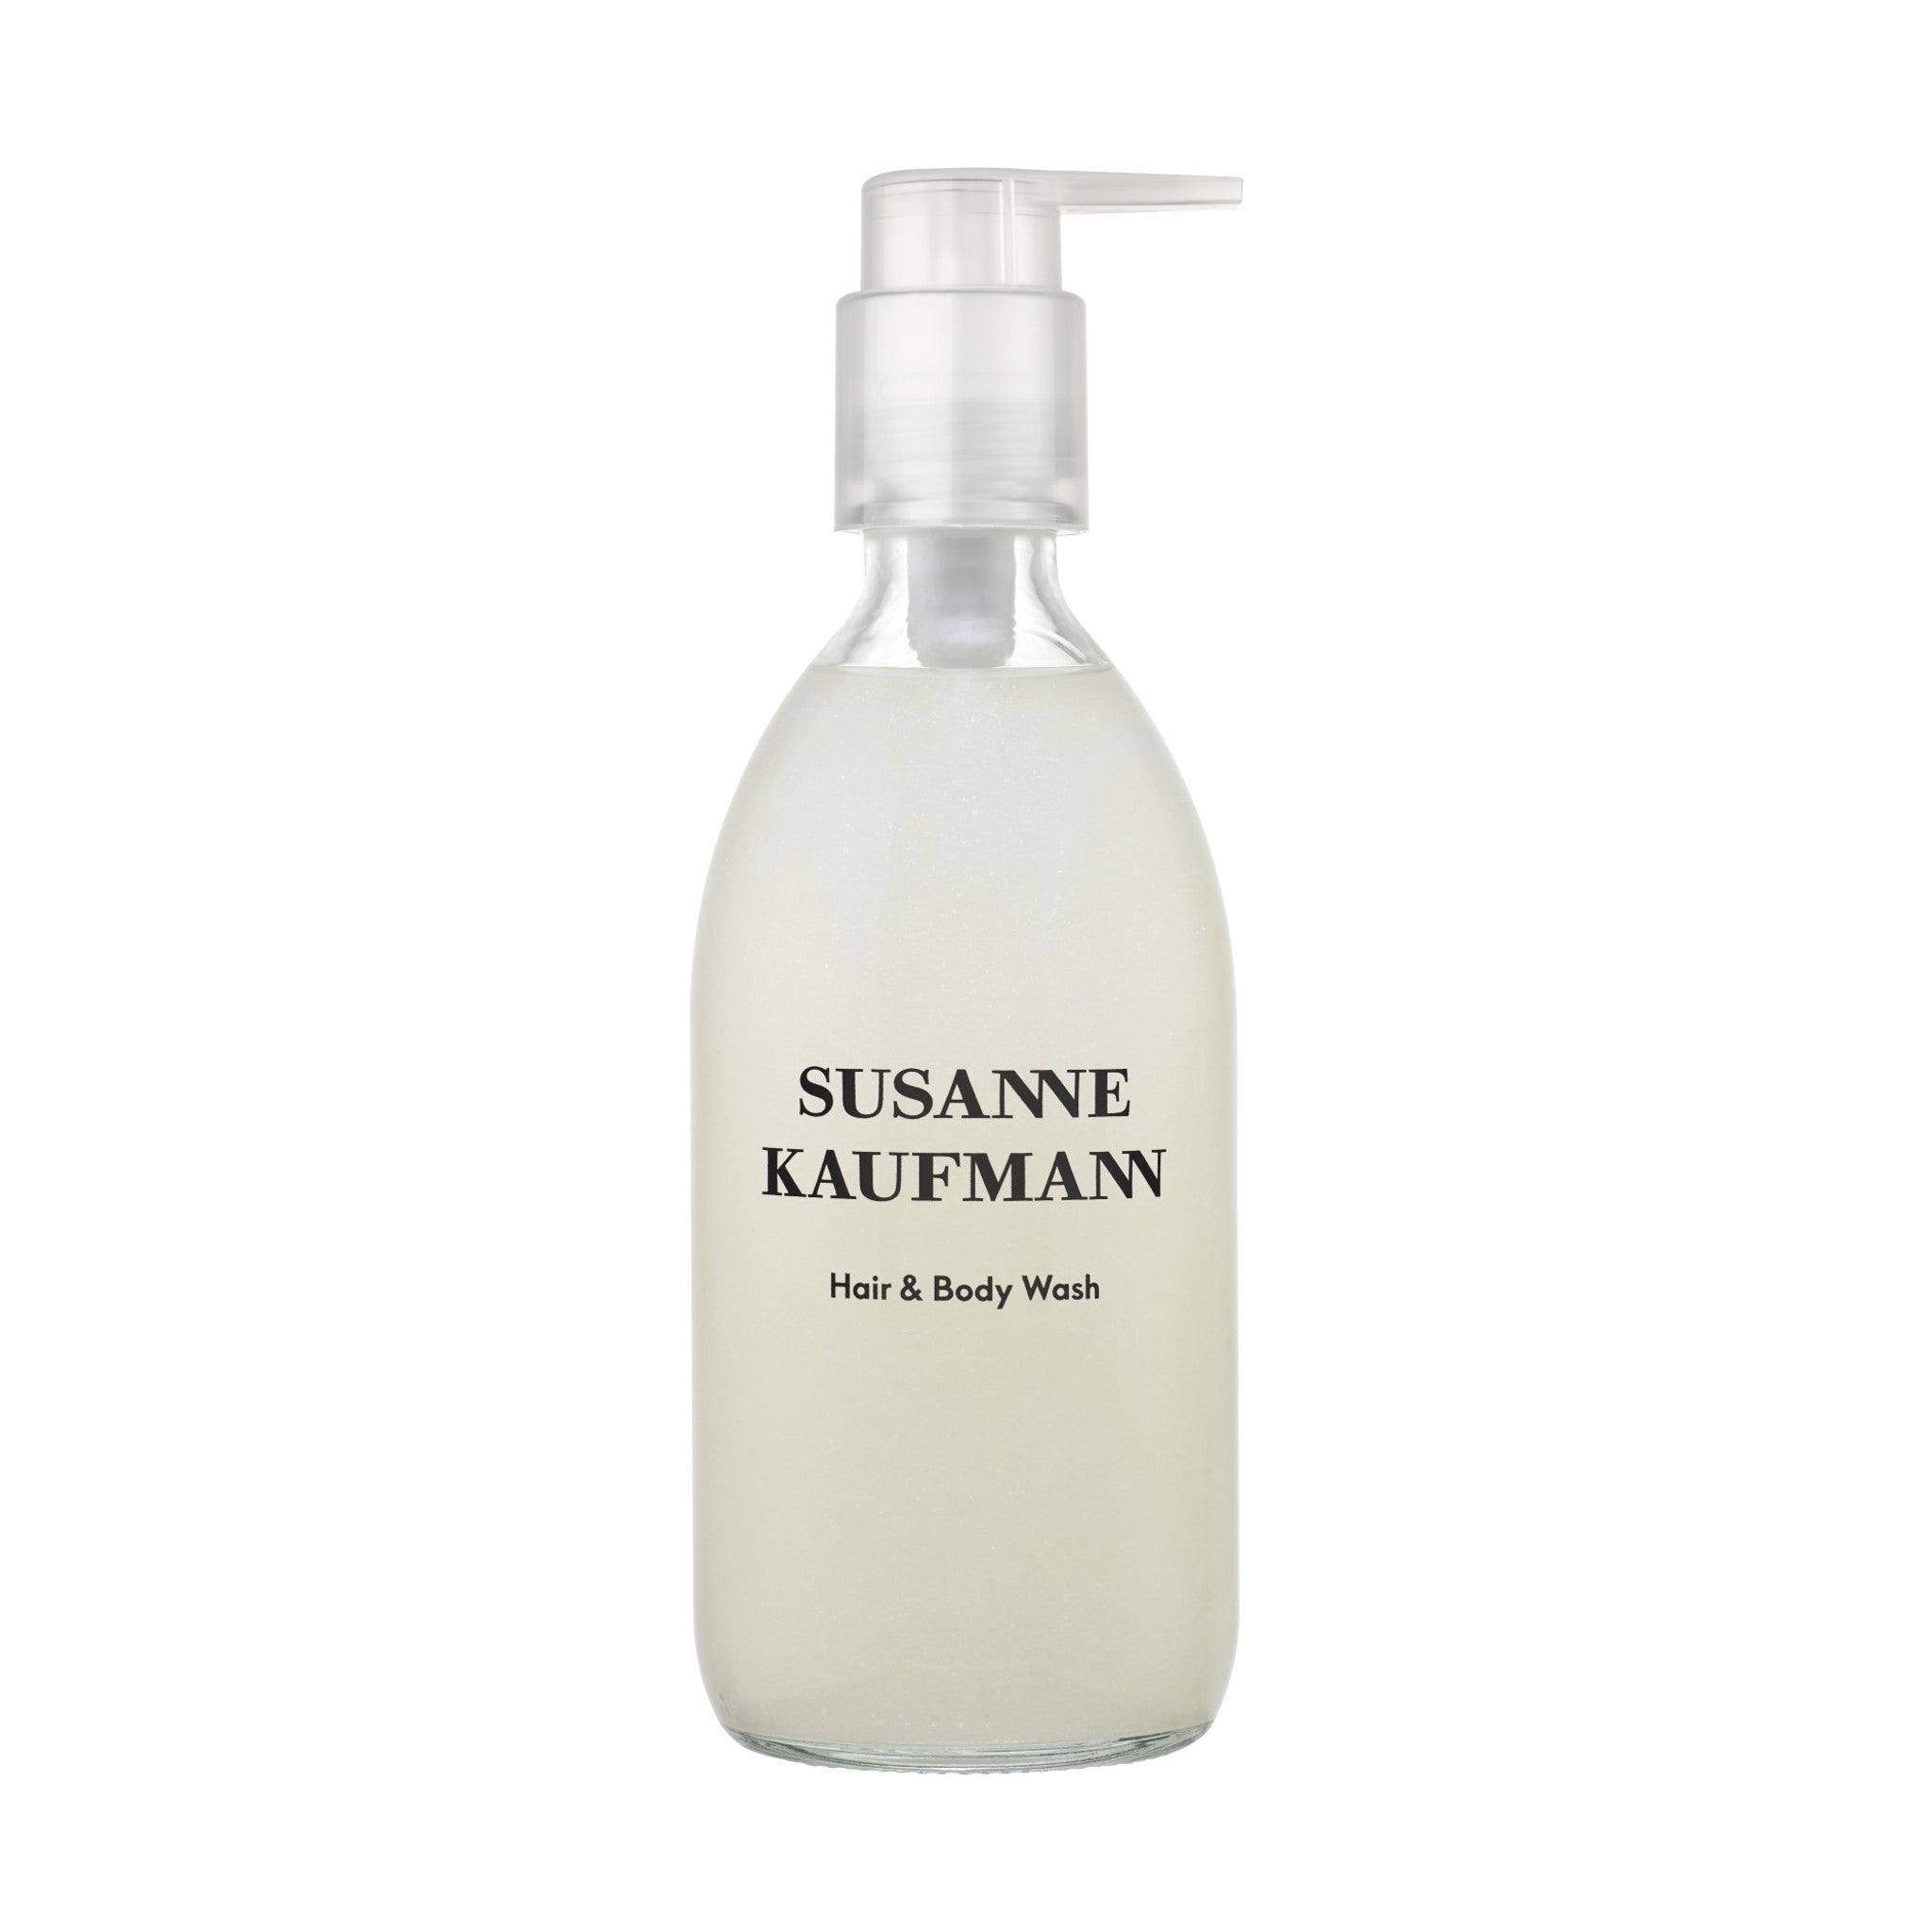 Susanne Kaufmann Hair and Body Wash main image.